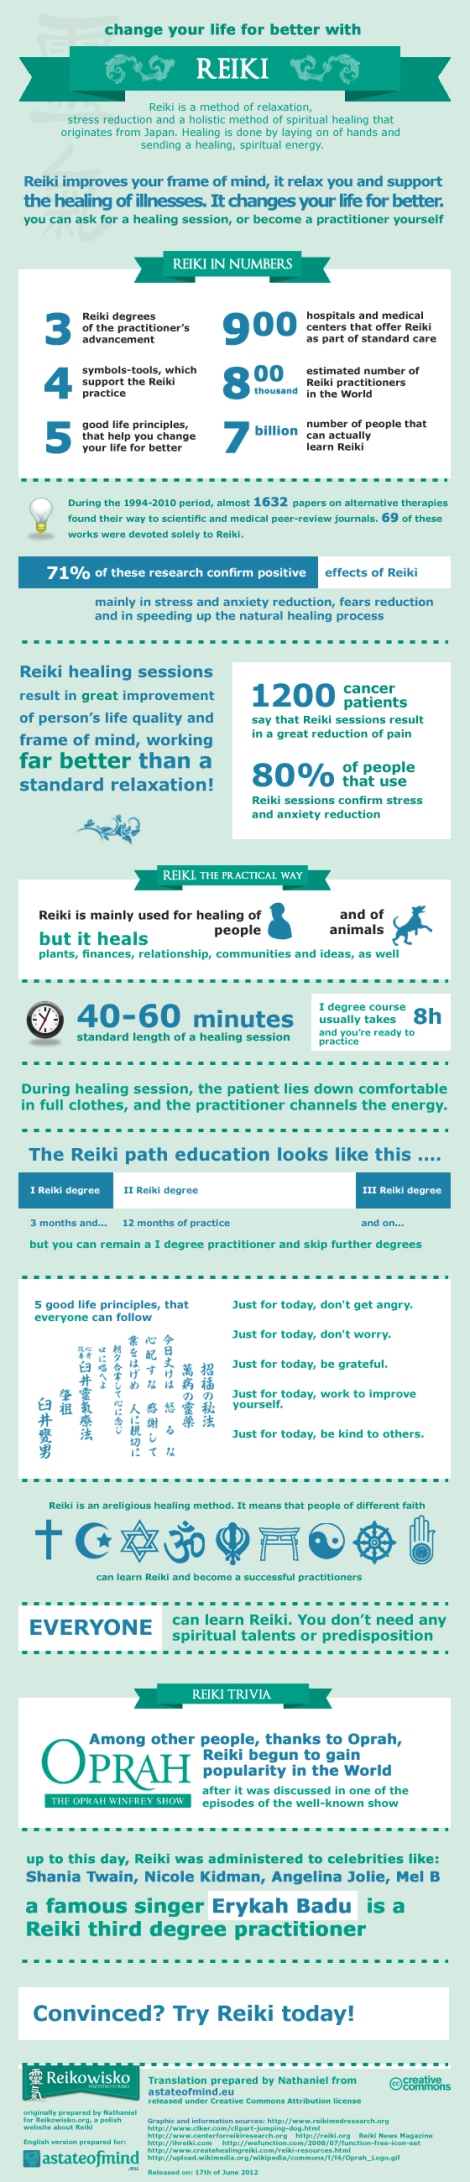 reiki-infographic